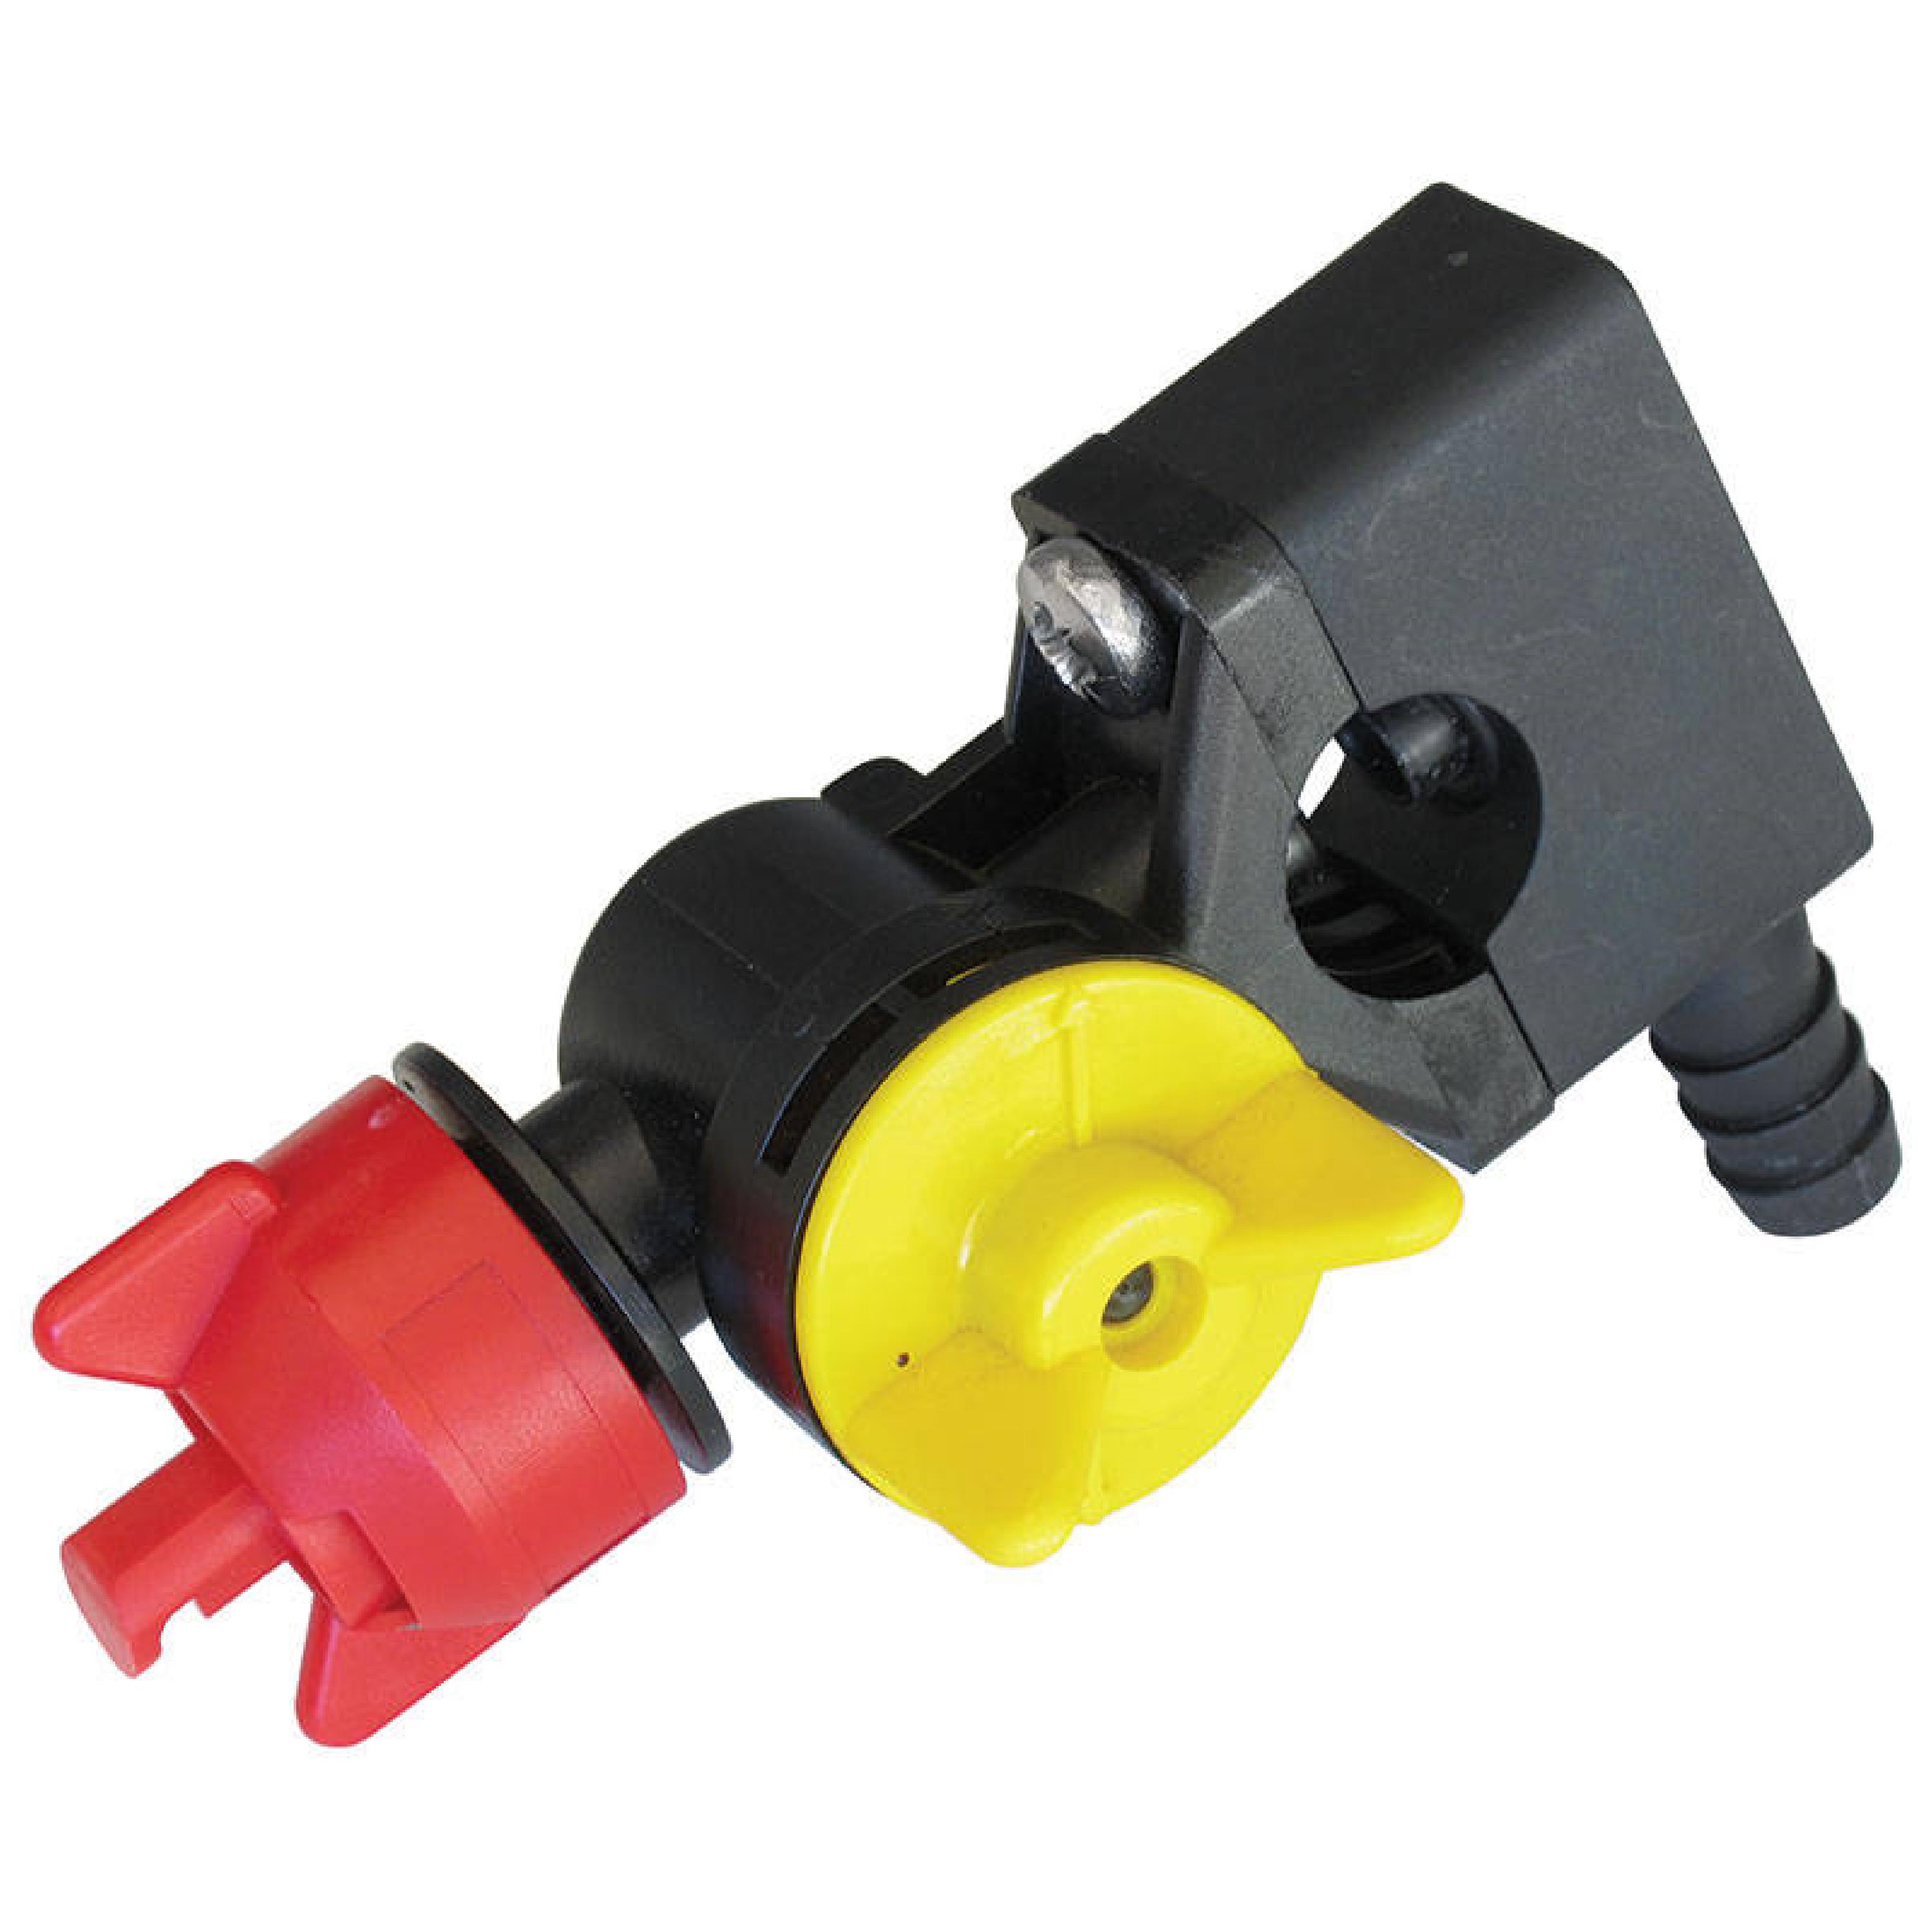 Details about   YS-BPV-3000 cutting cooling spray pump precision high gloss machine STR-01 spray